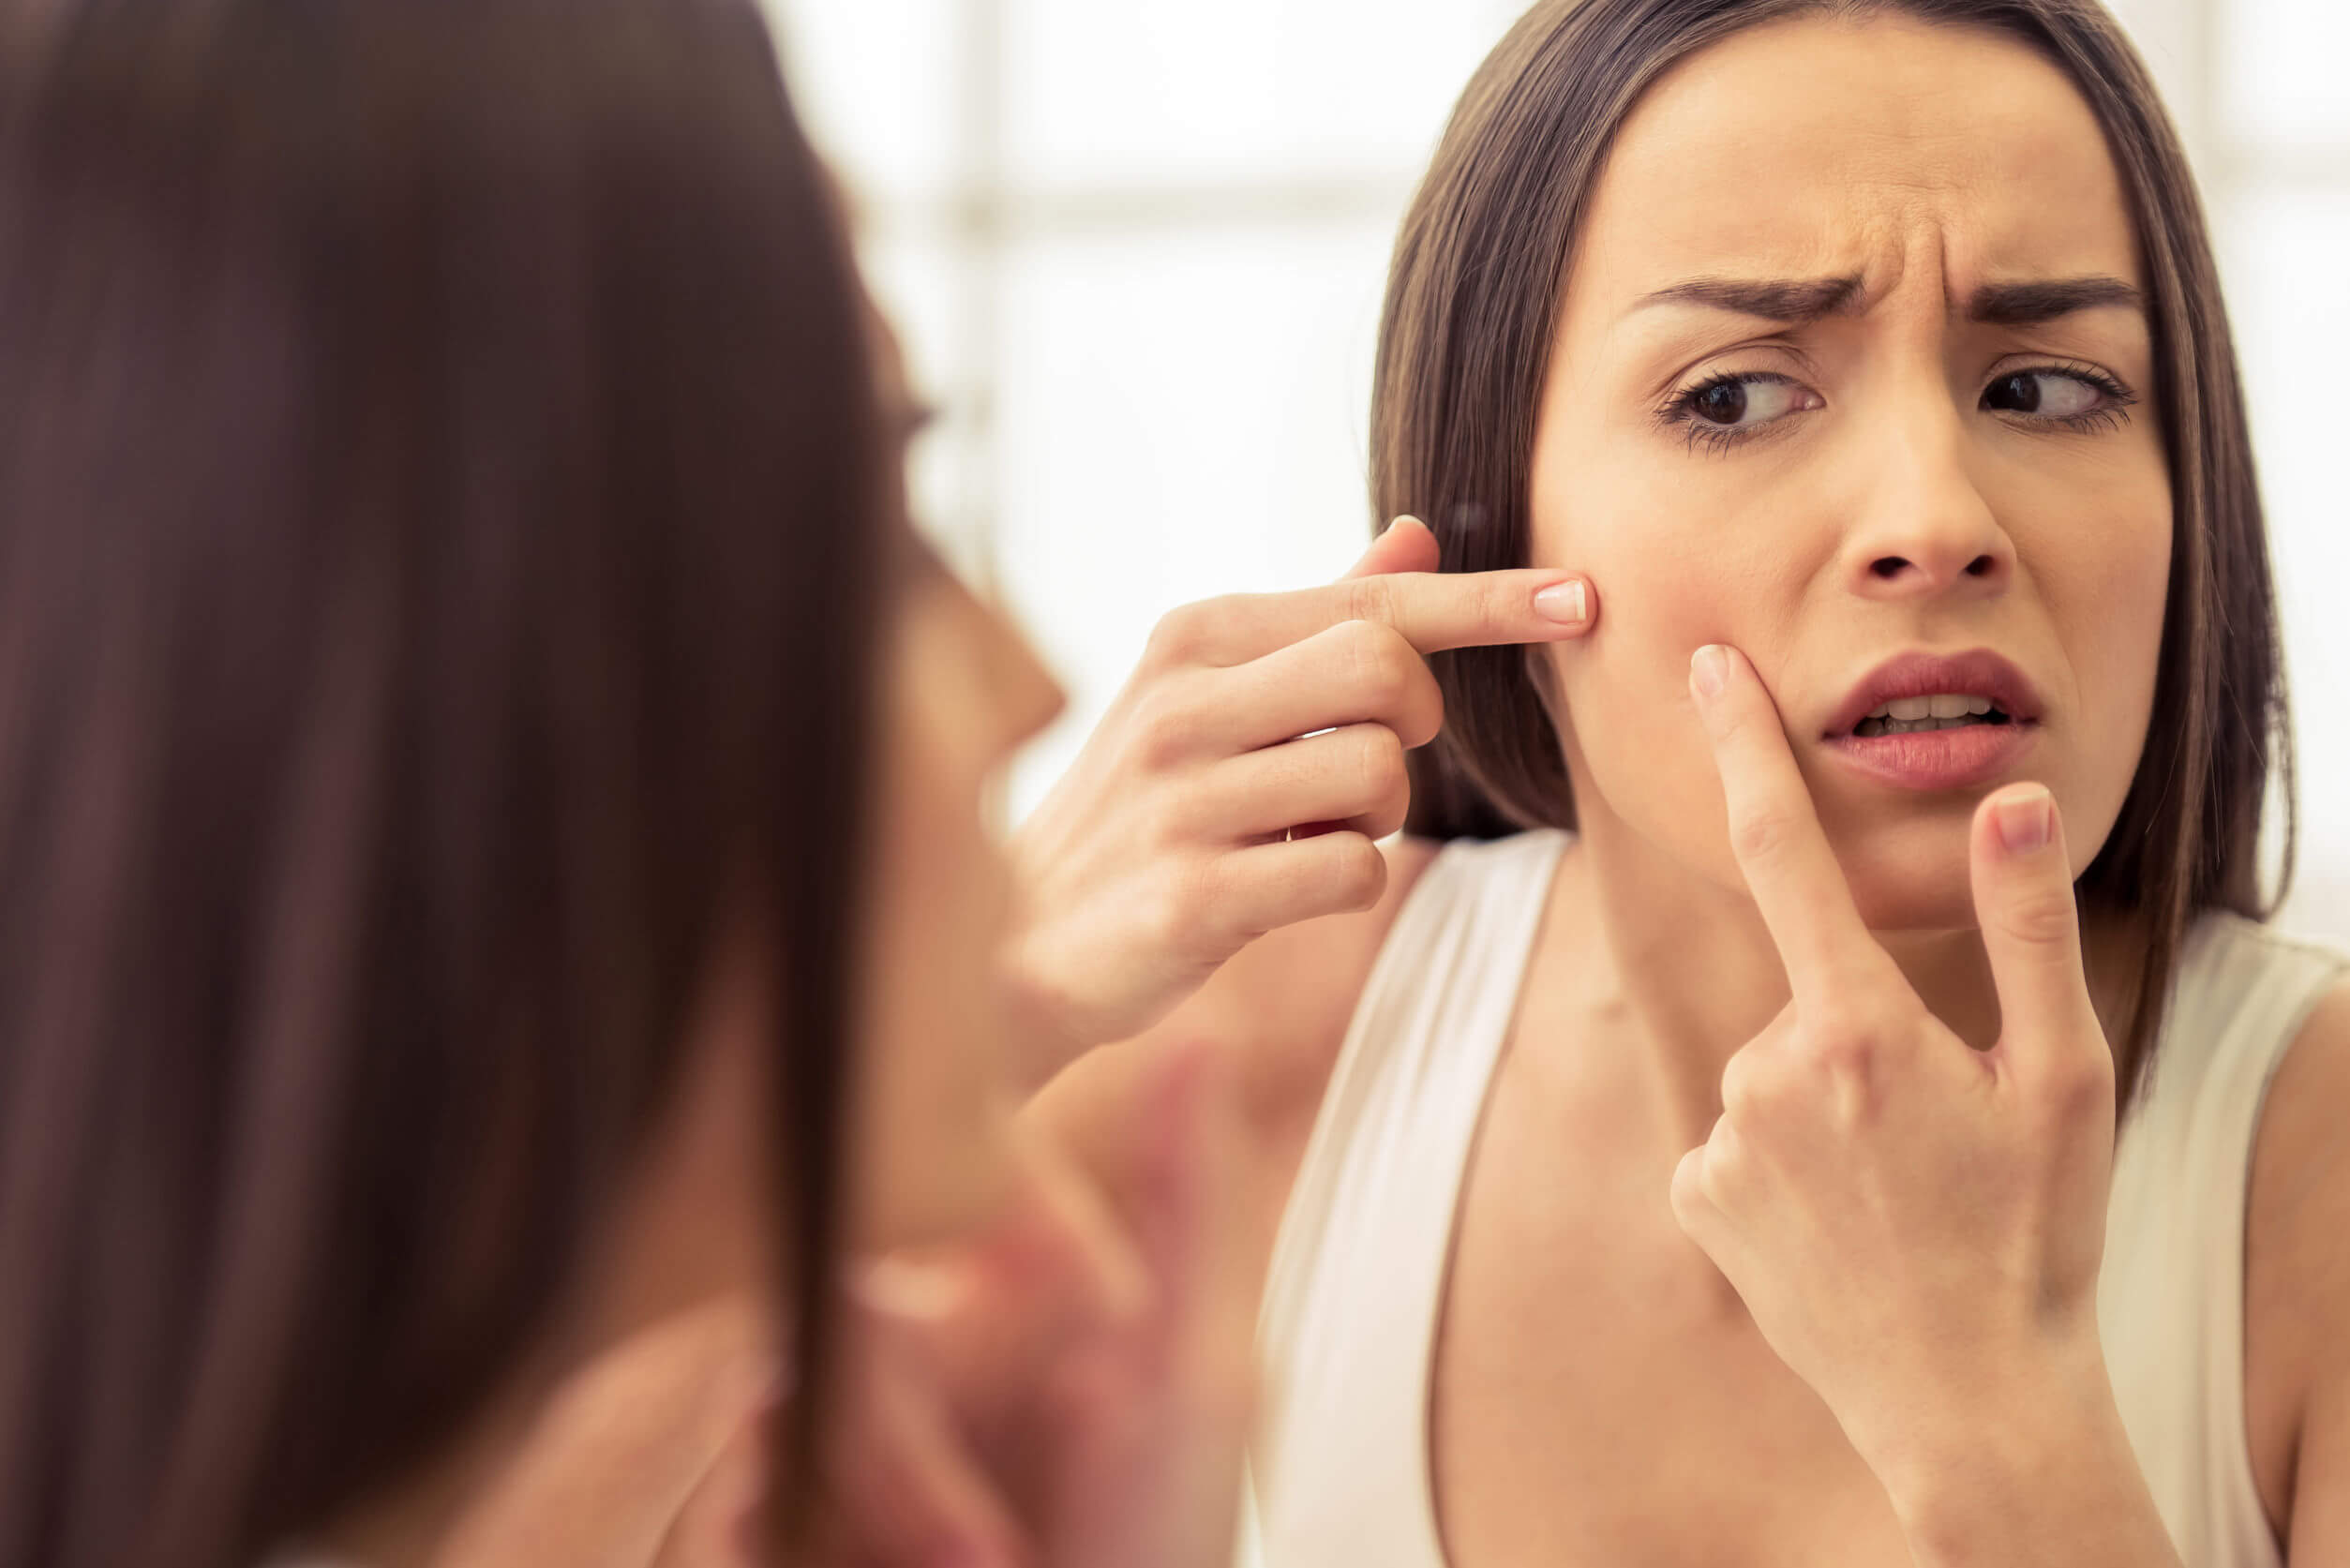 Symptoms of PCOS include acne breakouts